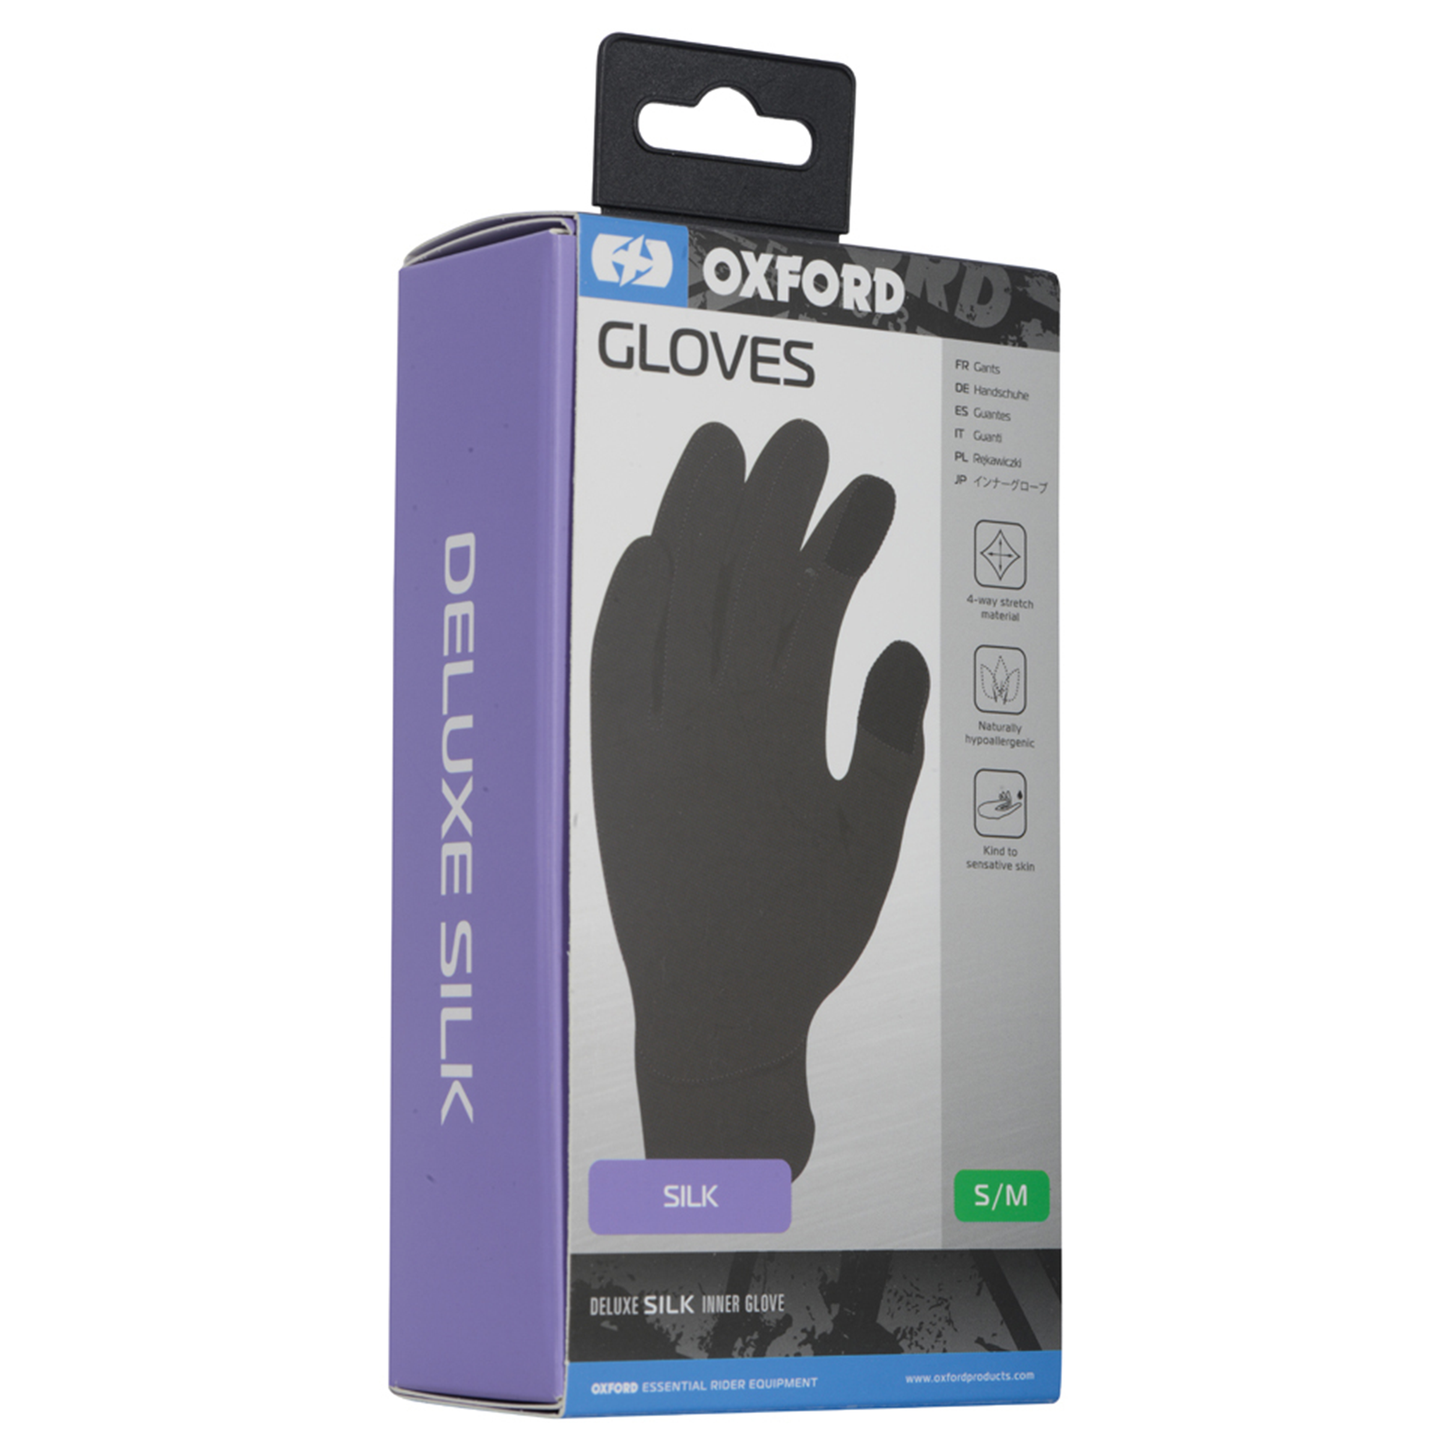 Oxford Deluxe Silk Gloves - Black